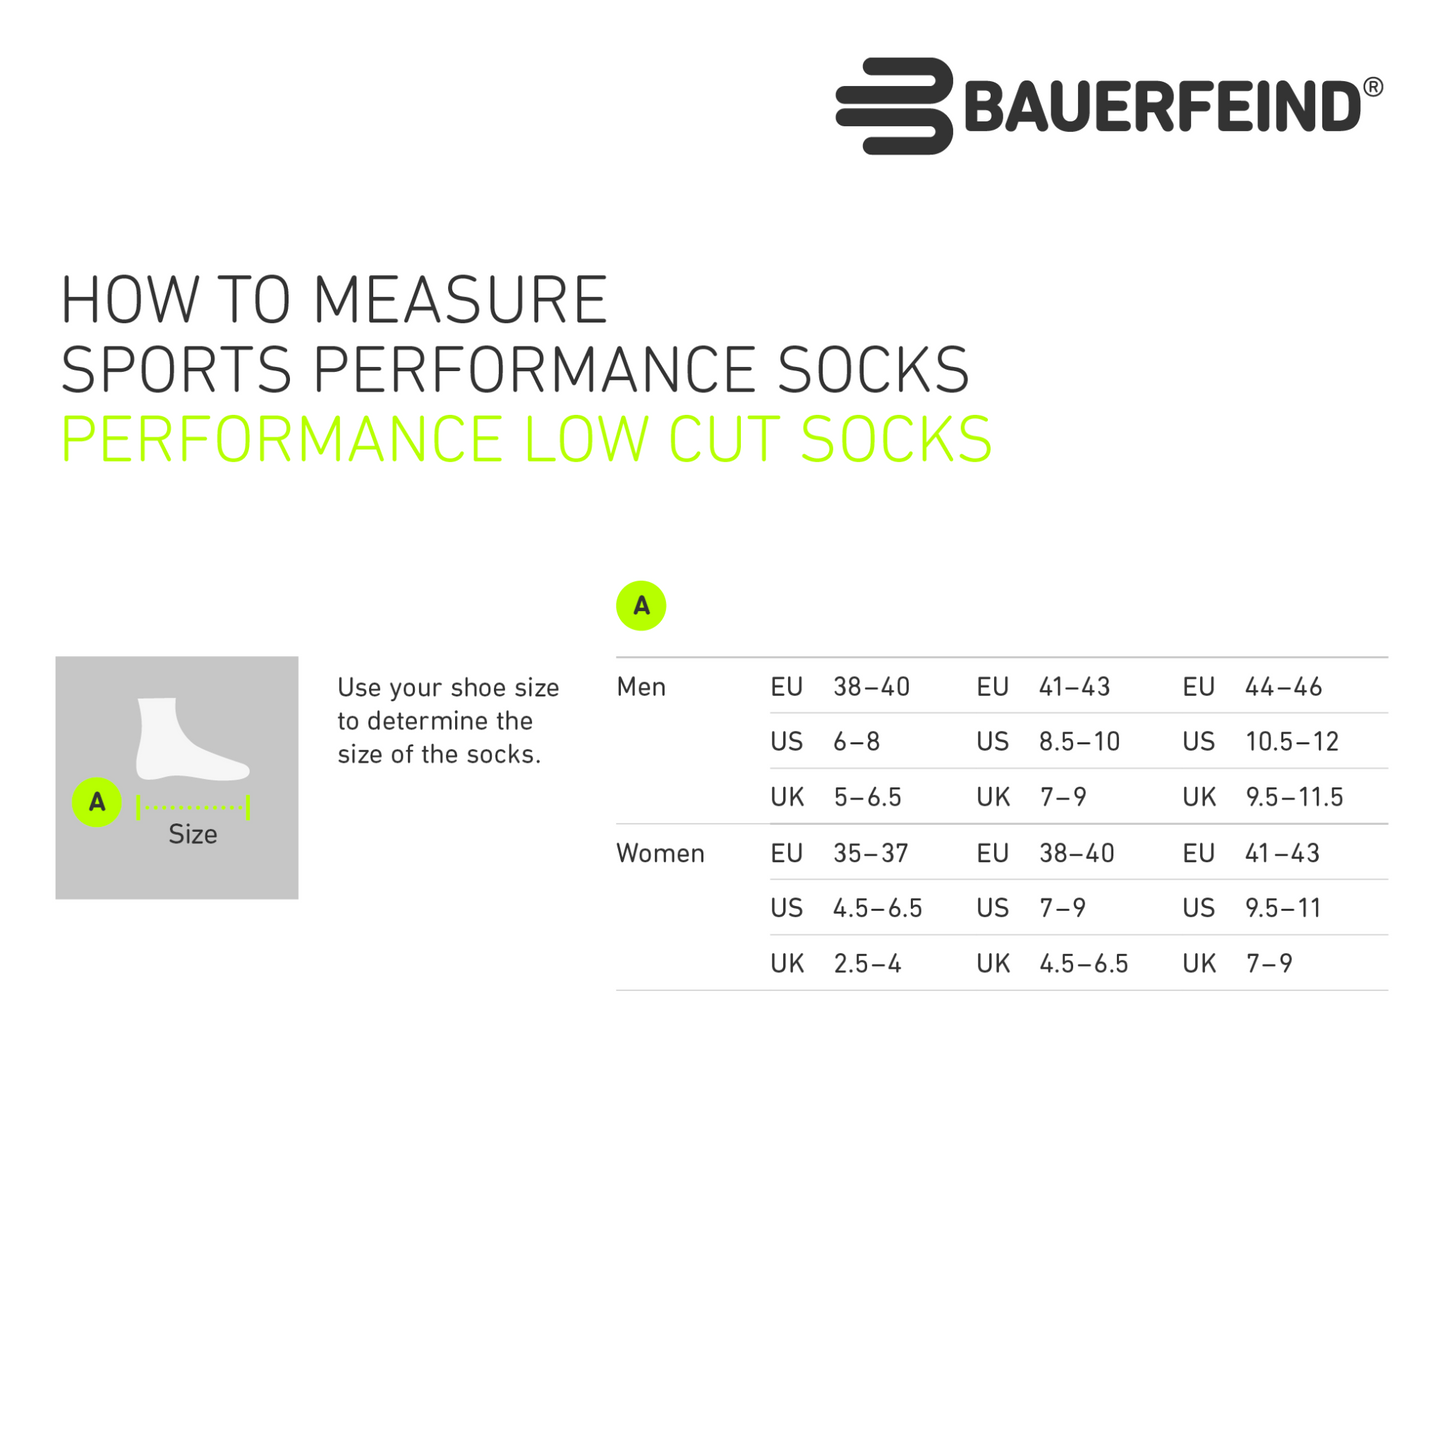 Bauerfeind Performance Socks Low Cut